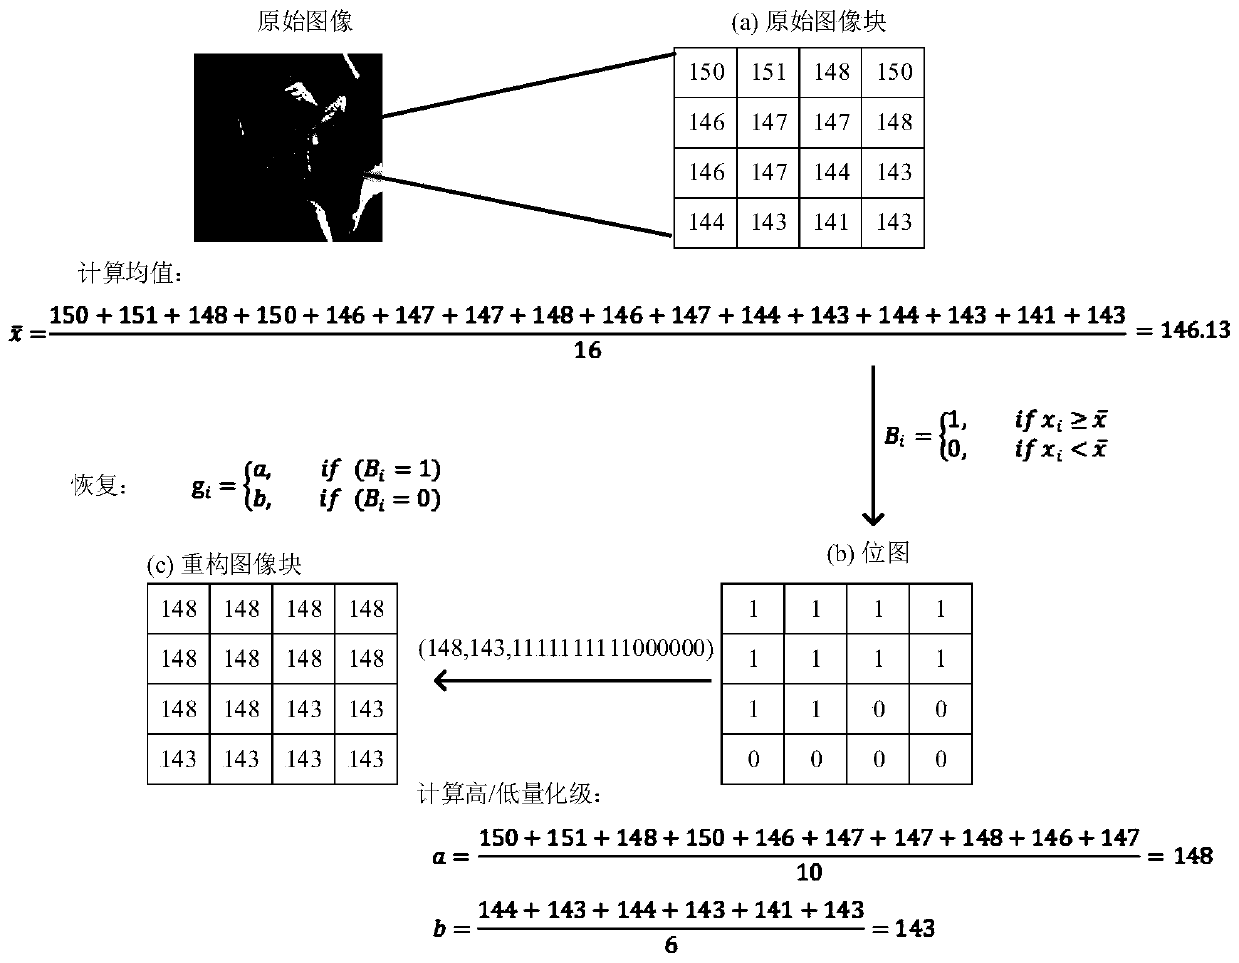 AMBTC-based modulo 2 operation and Hamming code information hiding method